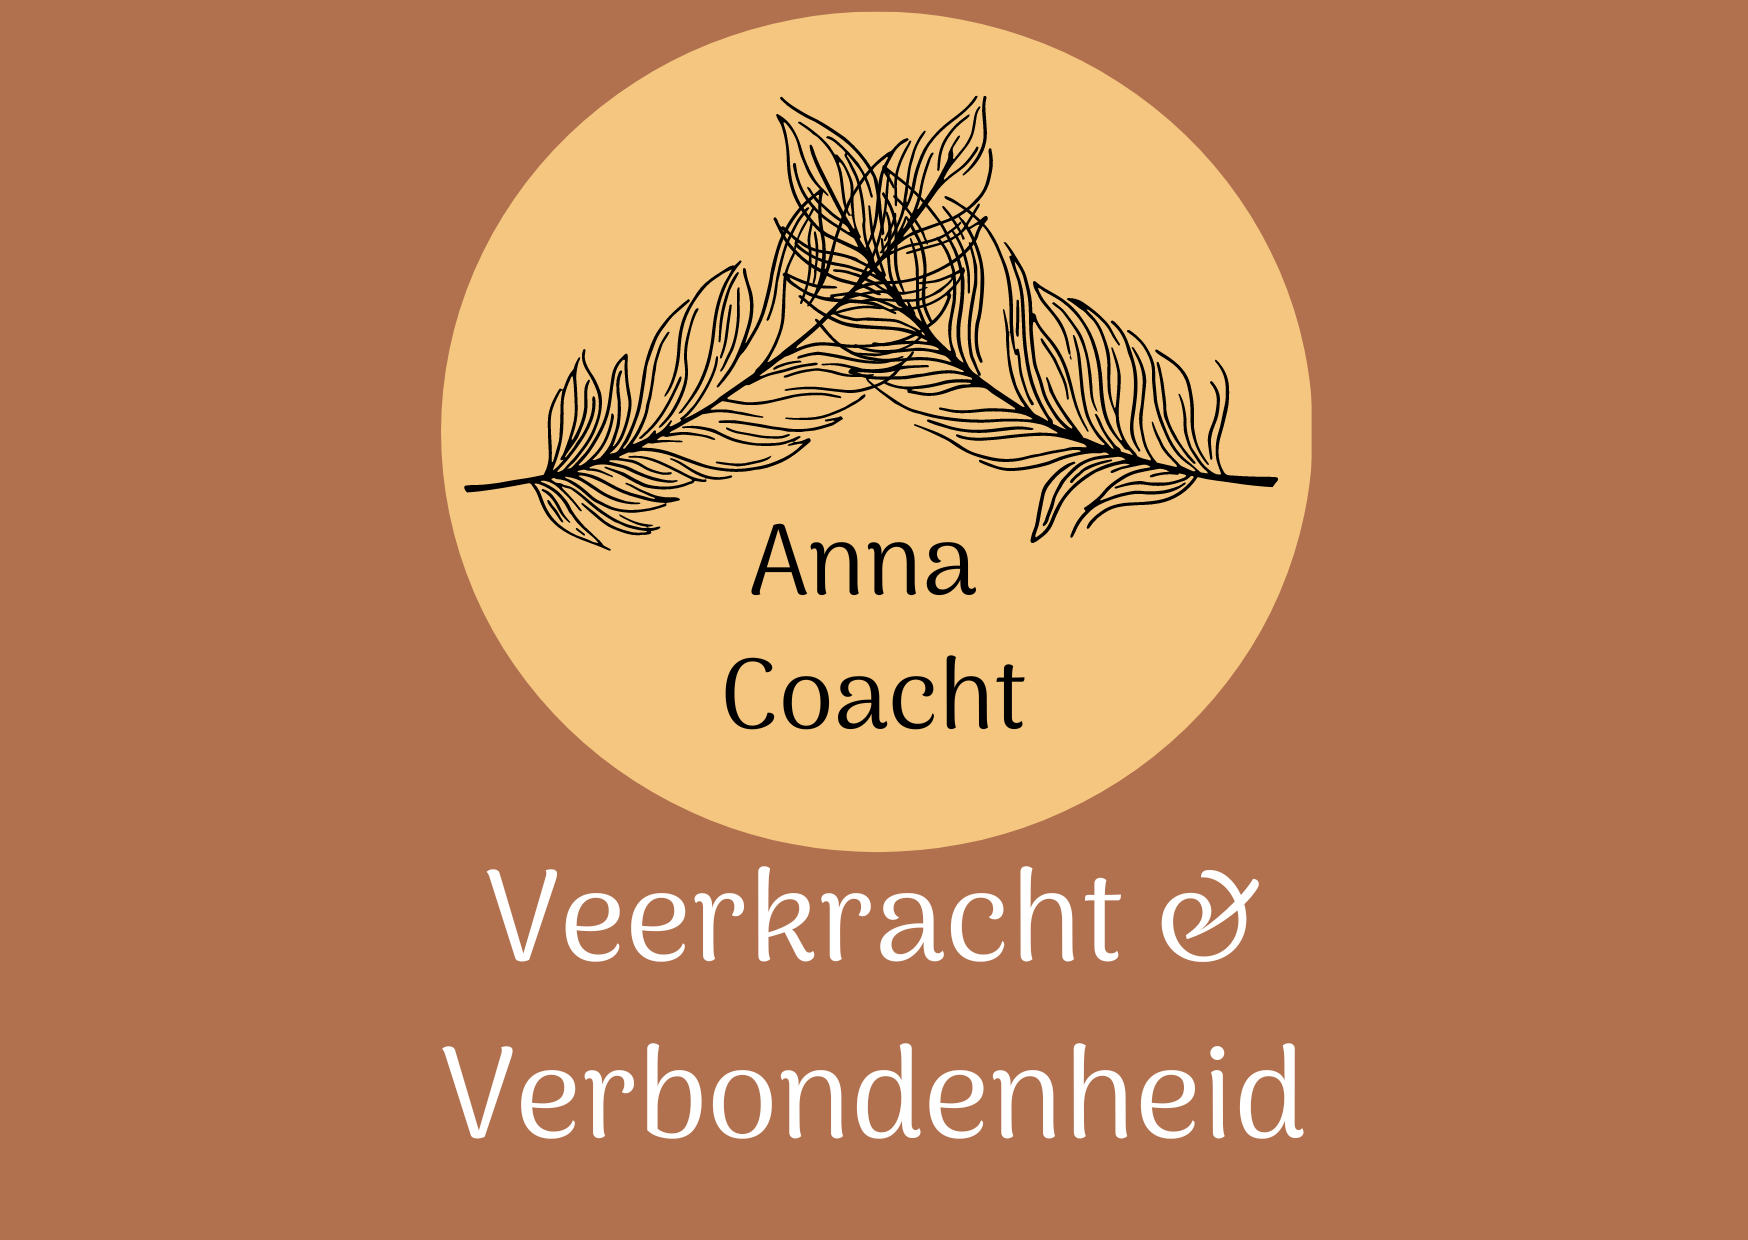 www.annacoacht.com